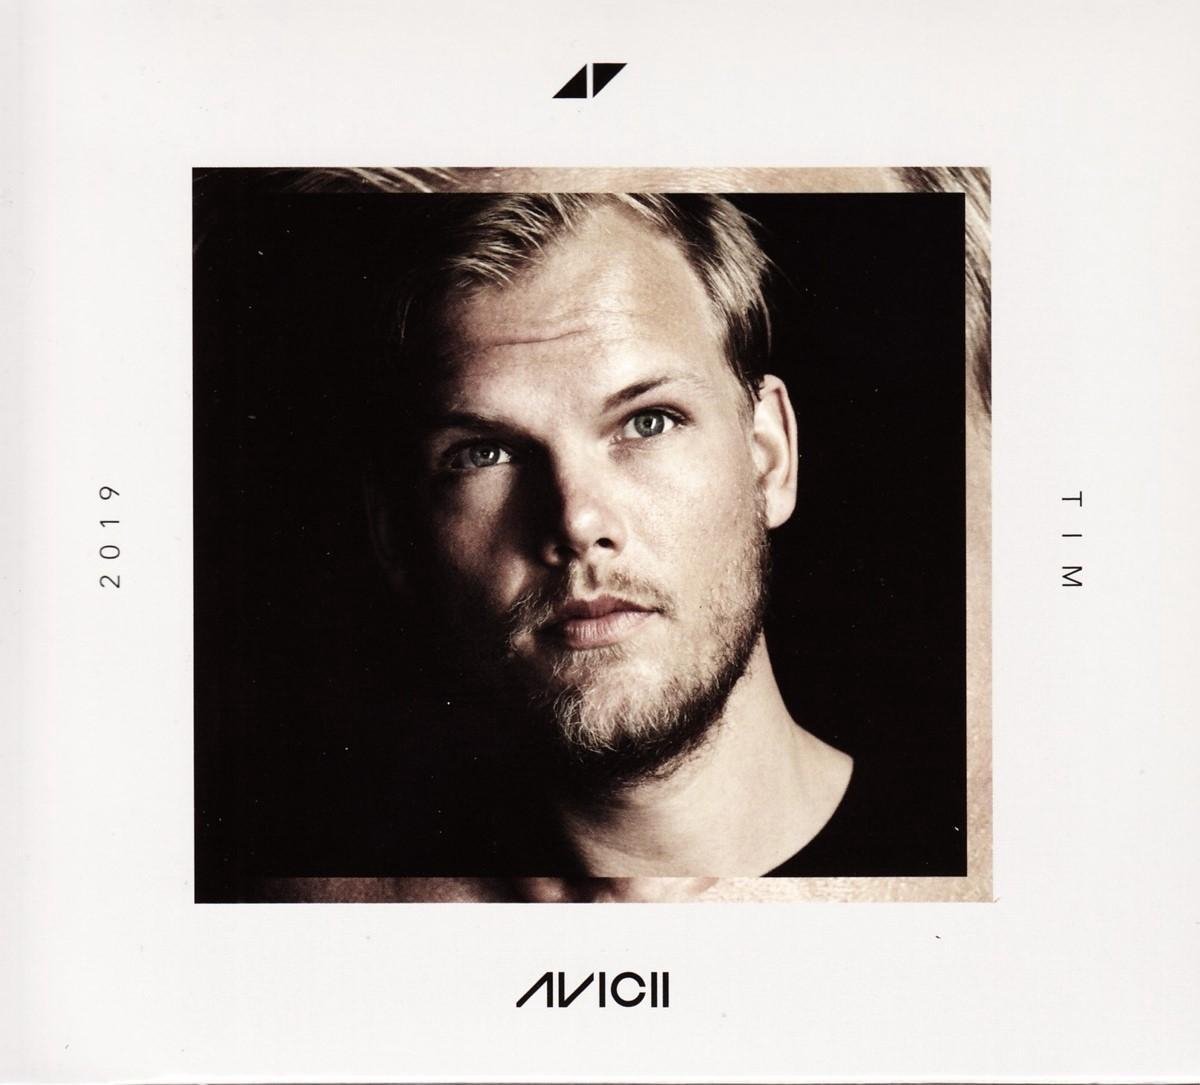 Avicii - Tim (CD) - Avicii